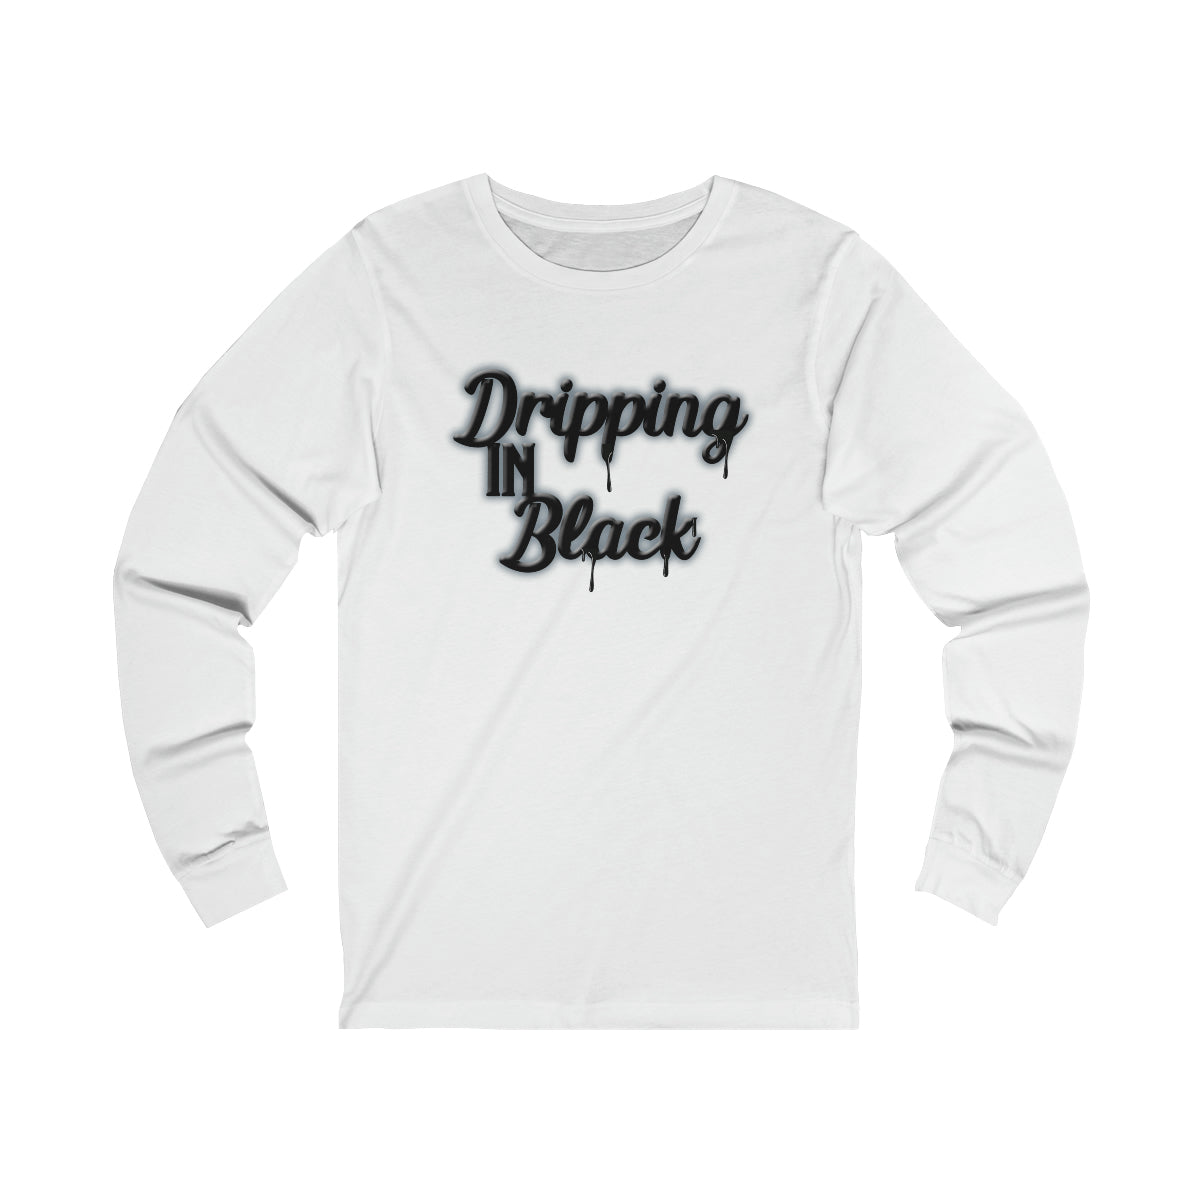 Dripping in Black Long Sleeve Shirt